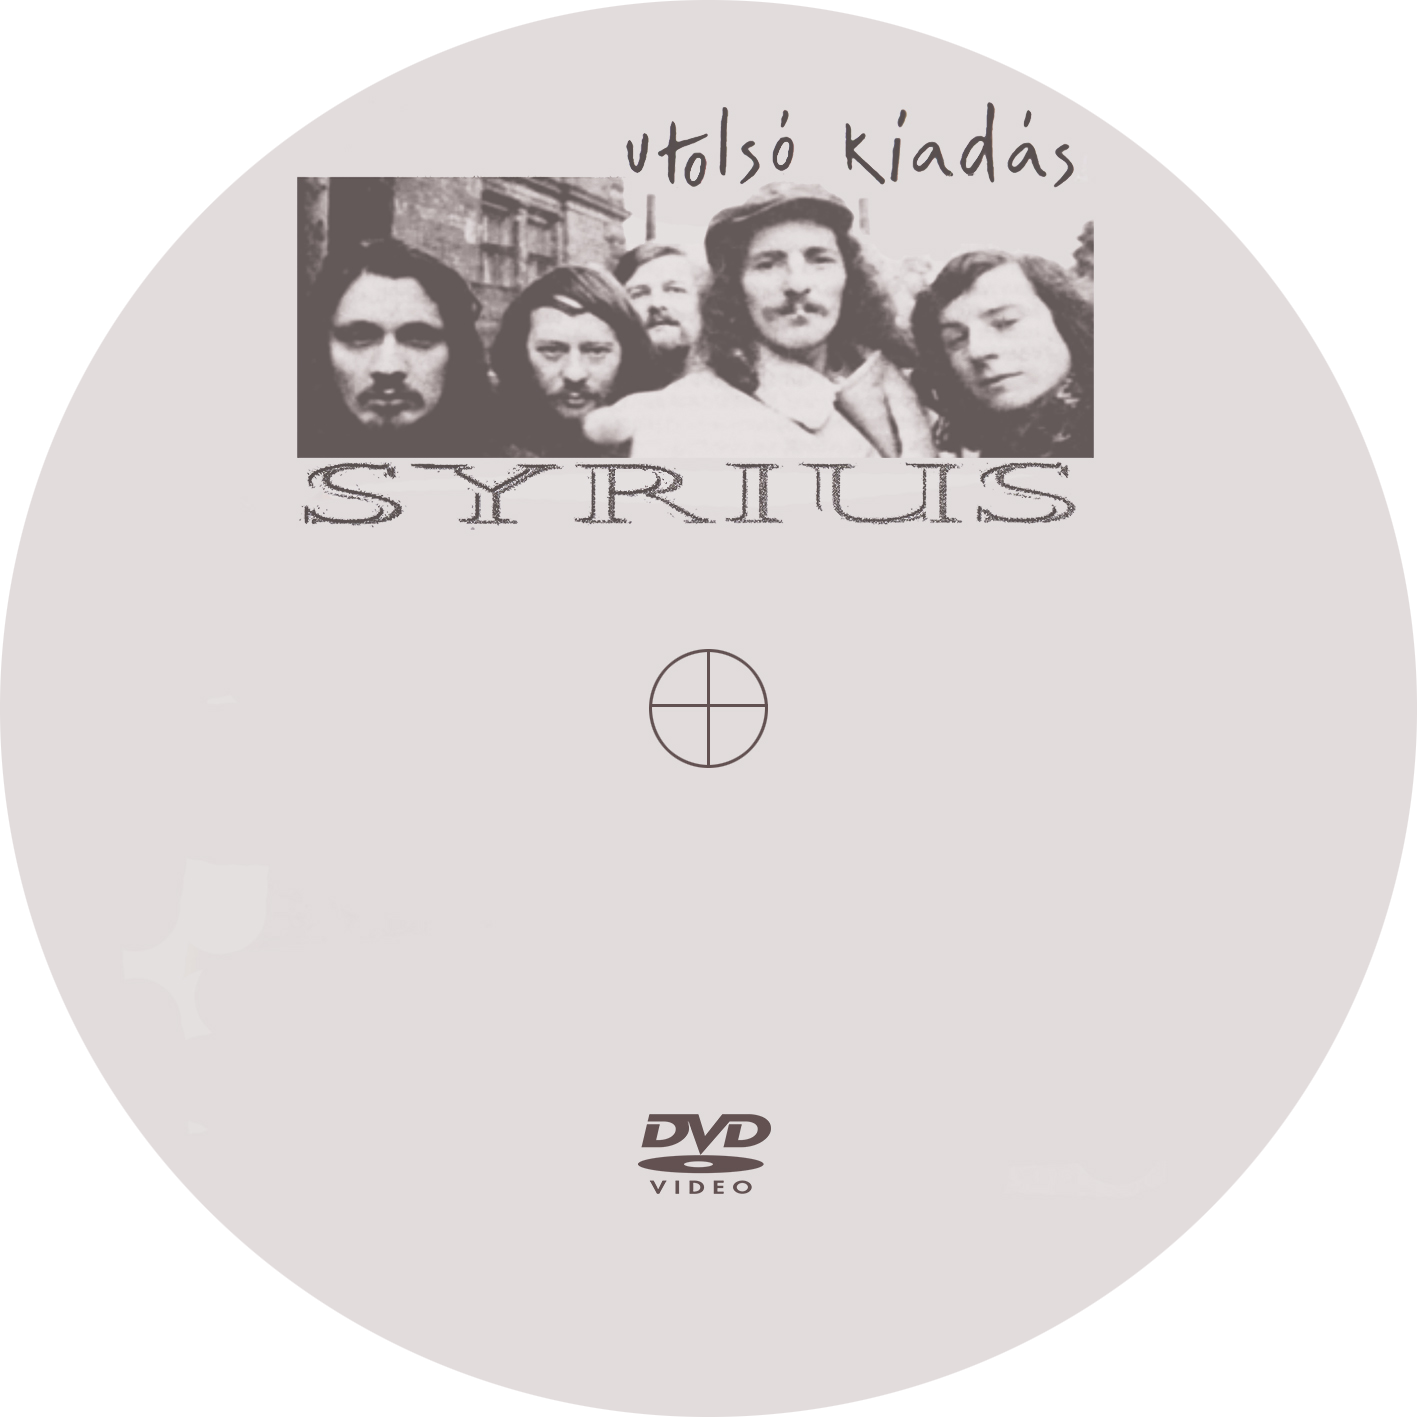 Syrius CD DVD Utolso Kiadas my own label DVD